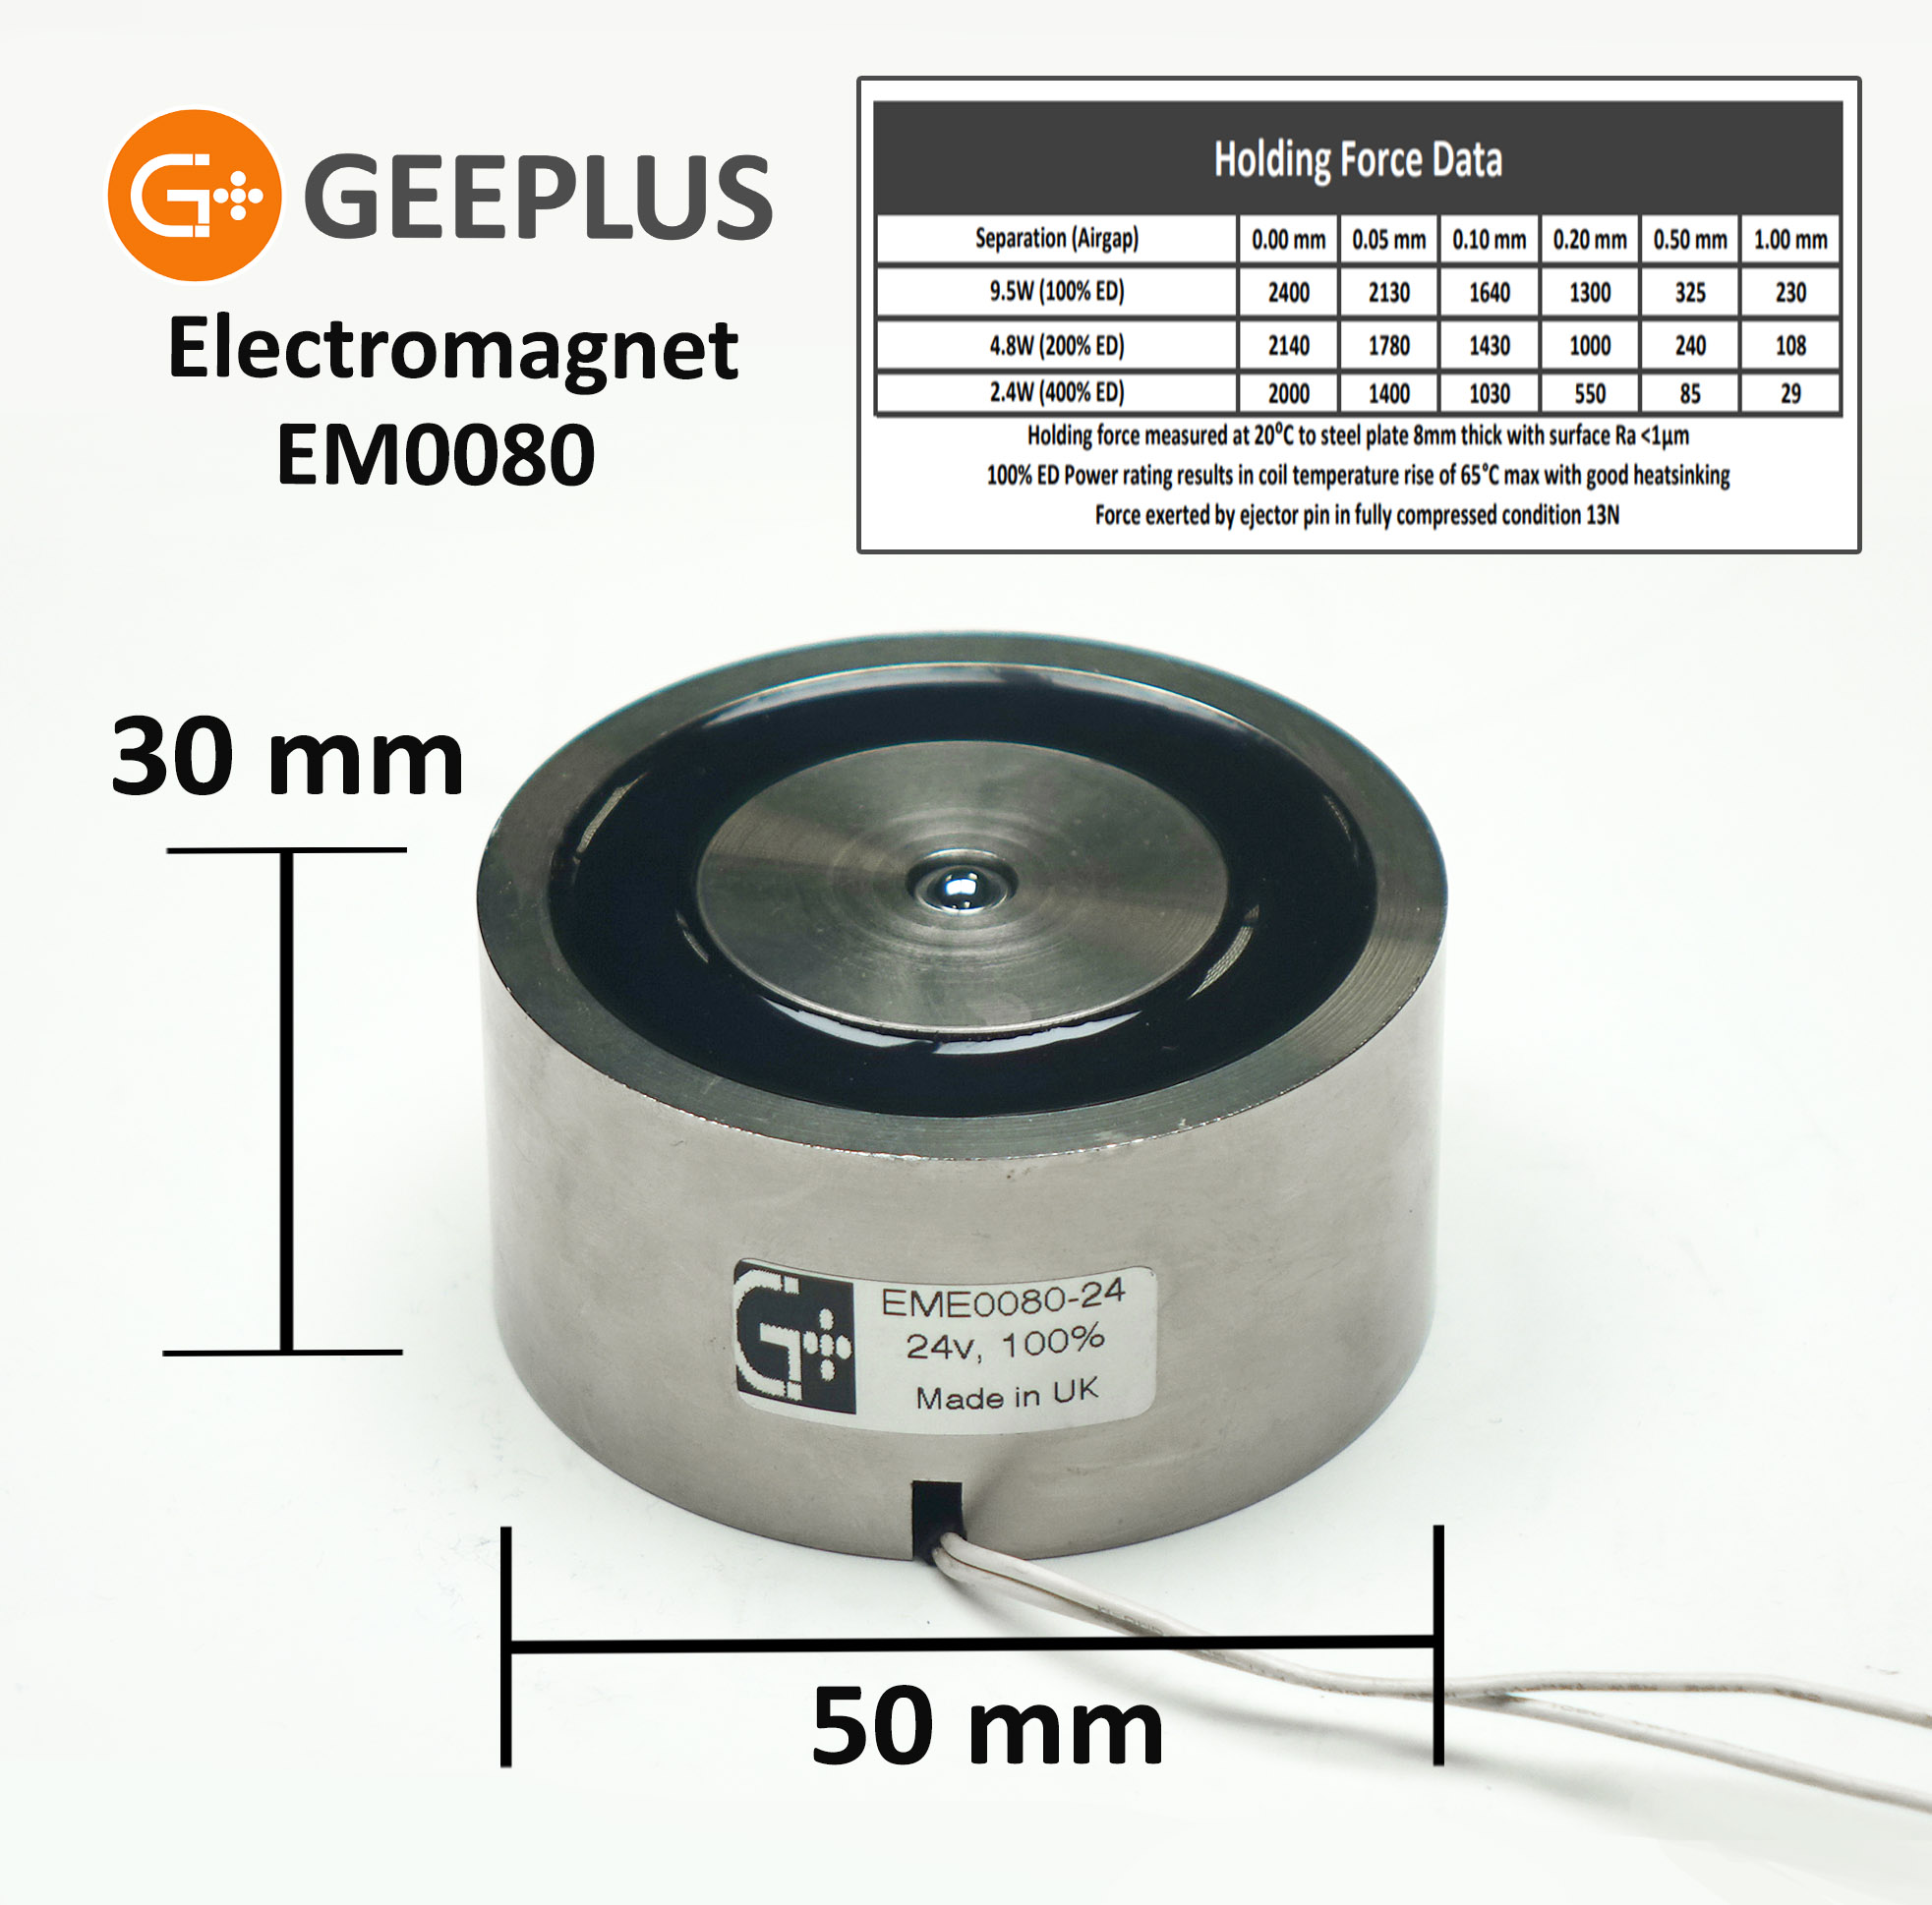 Geeplus Electromagnet EME0080